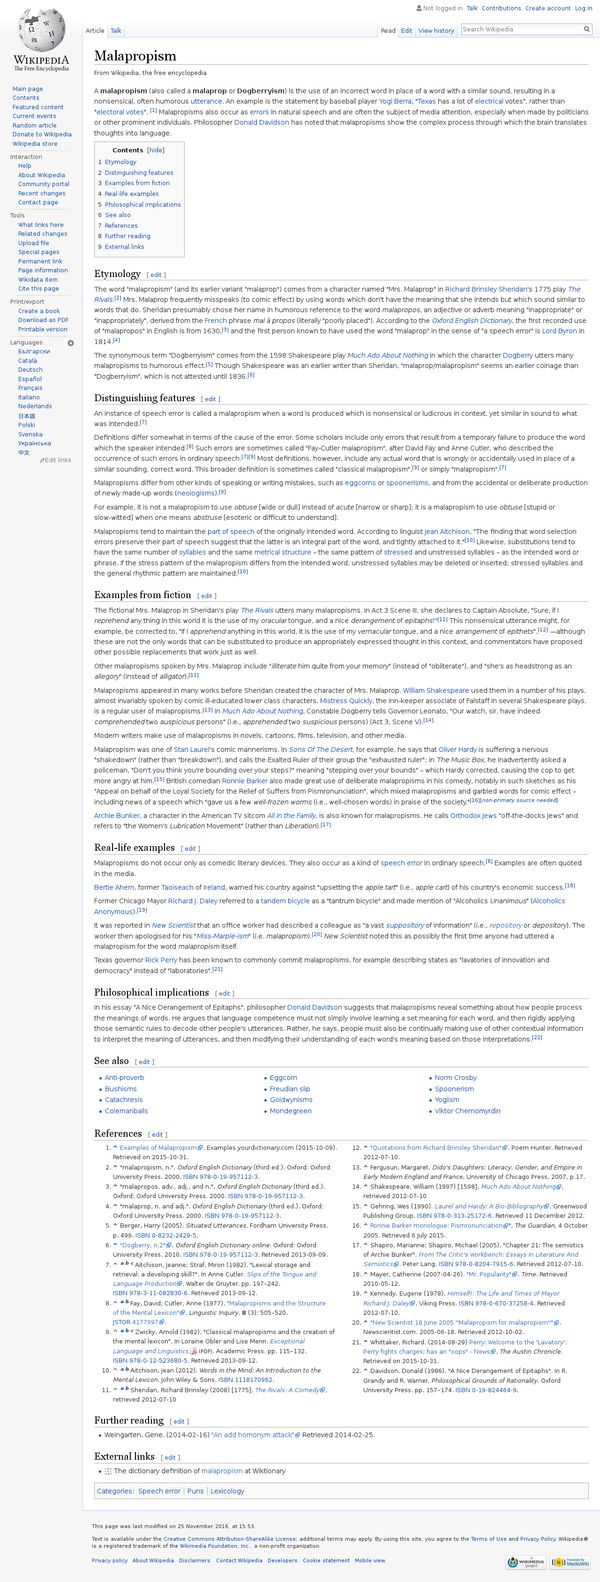 Malapropism - Wikipedia, the free encyclopedia